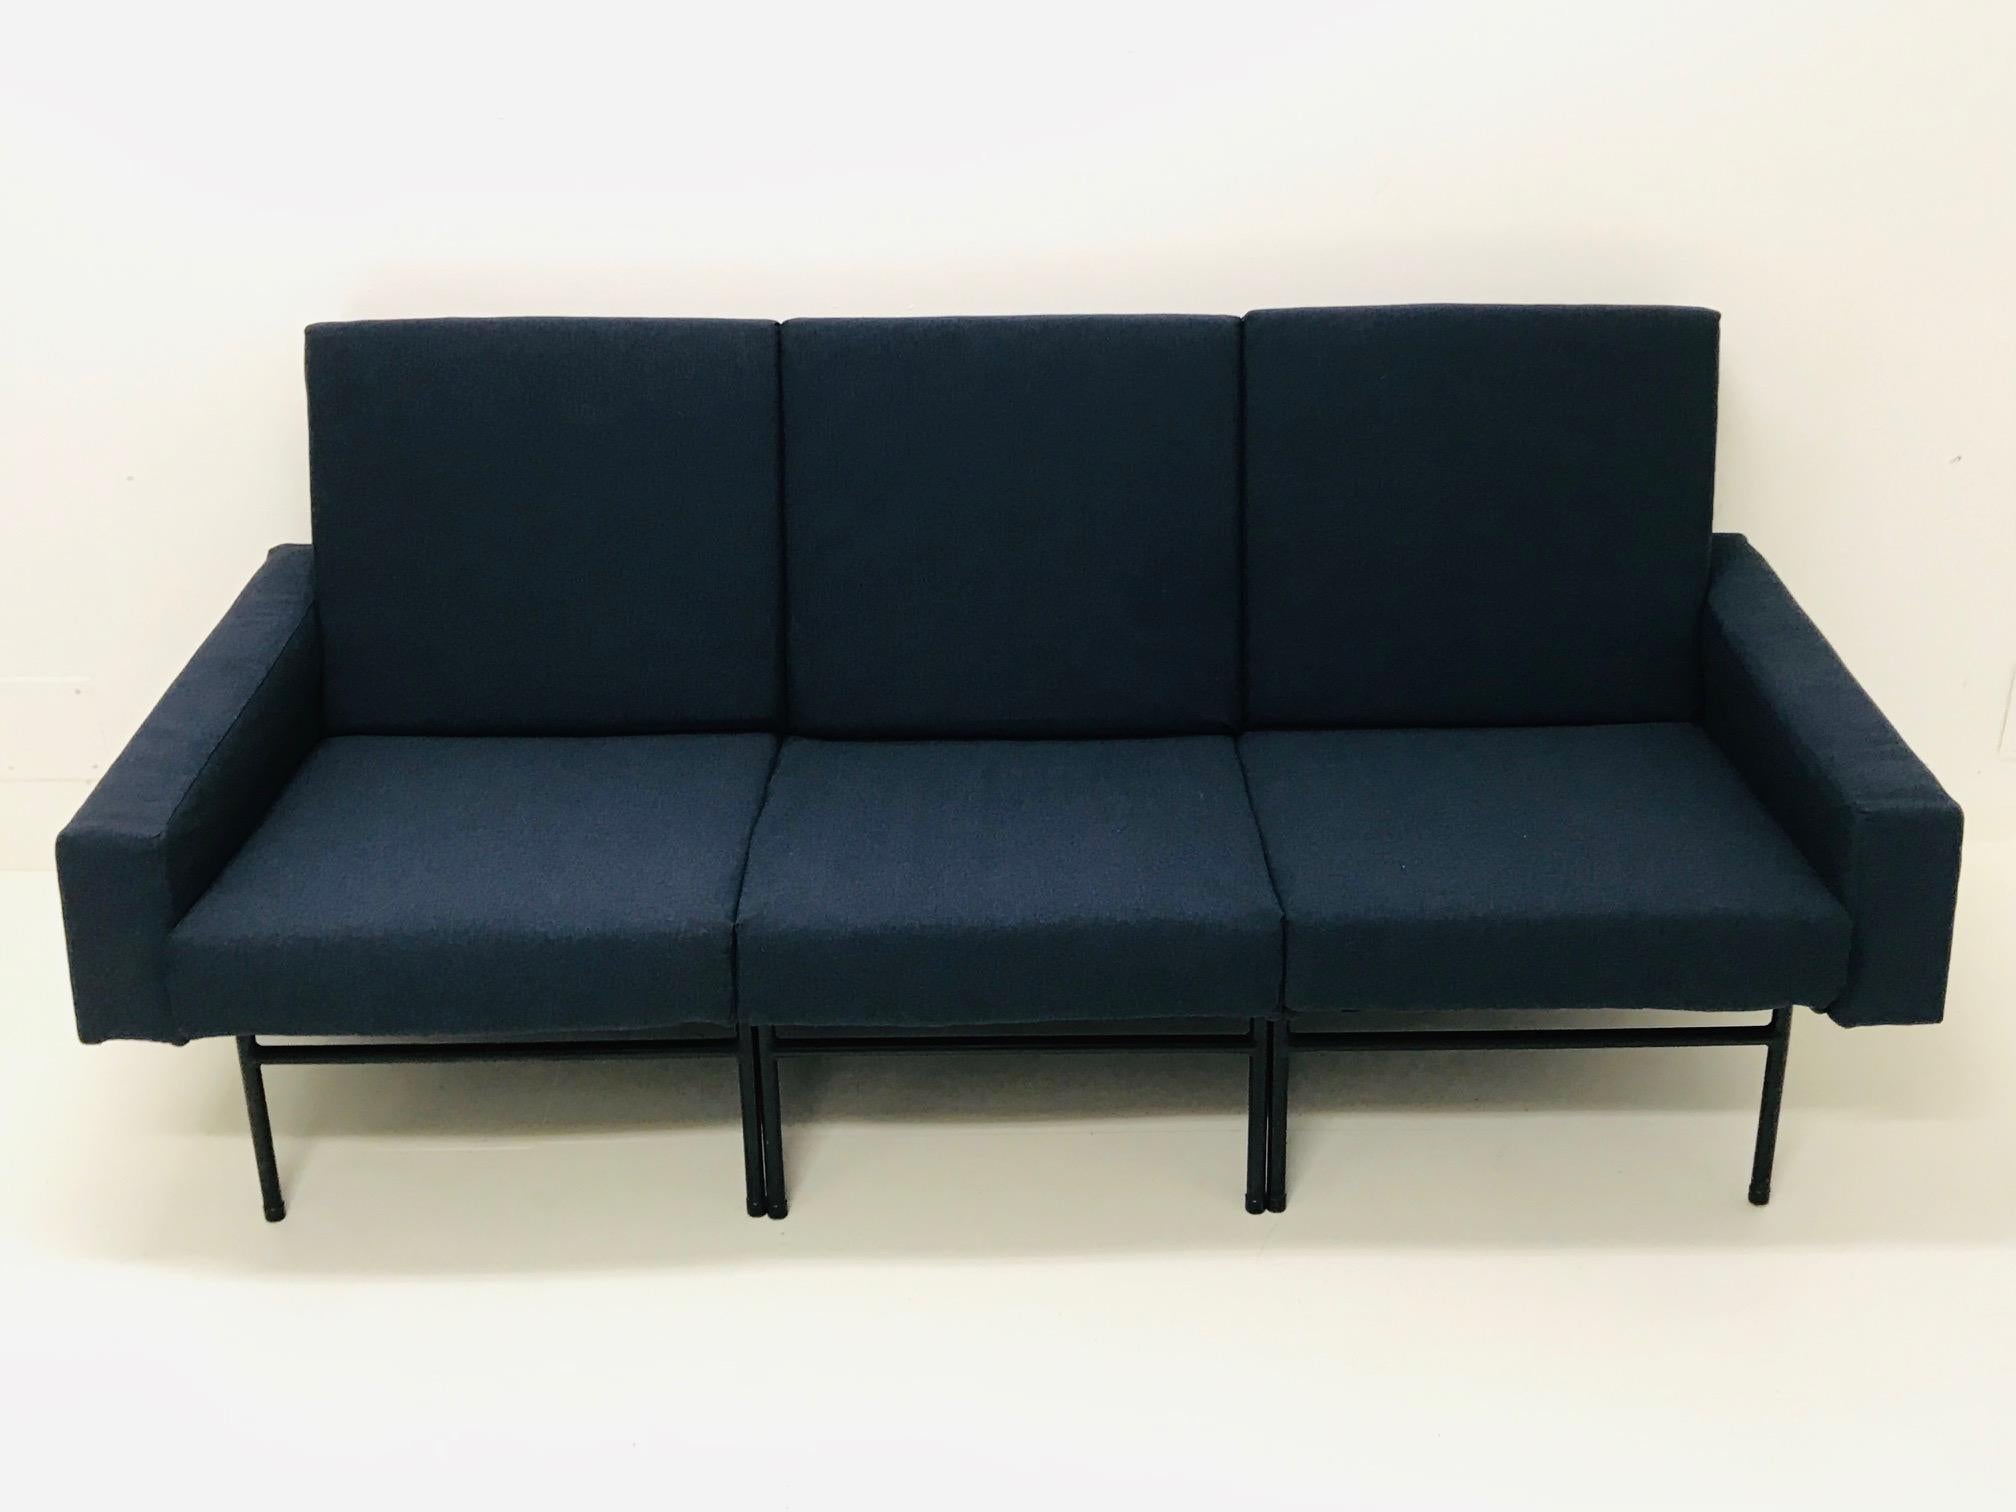 Mid-Century Modern Pierre Guariche Three-Seat Sofa, Model G10 for Airborne, French Design